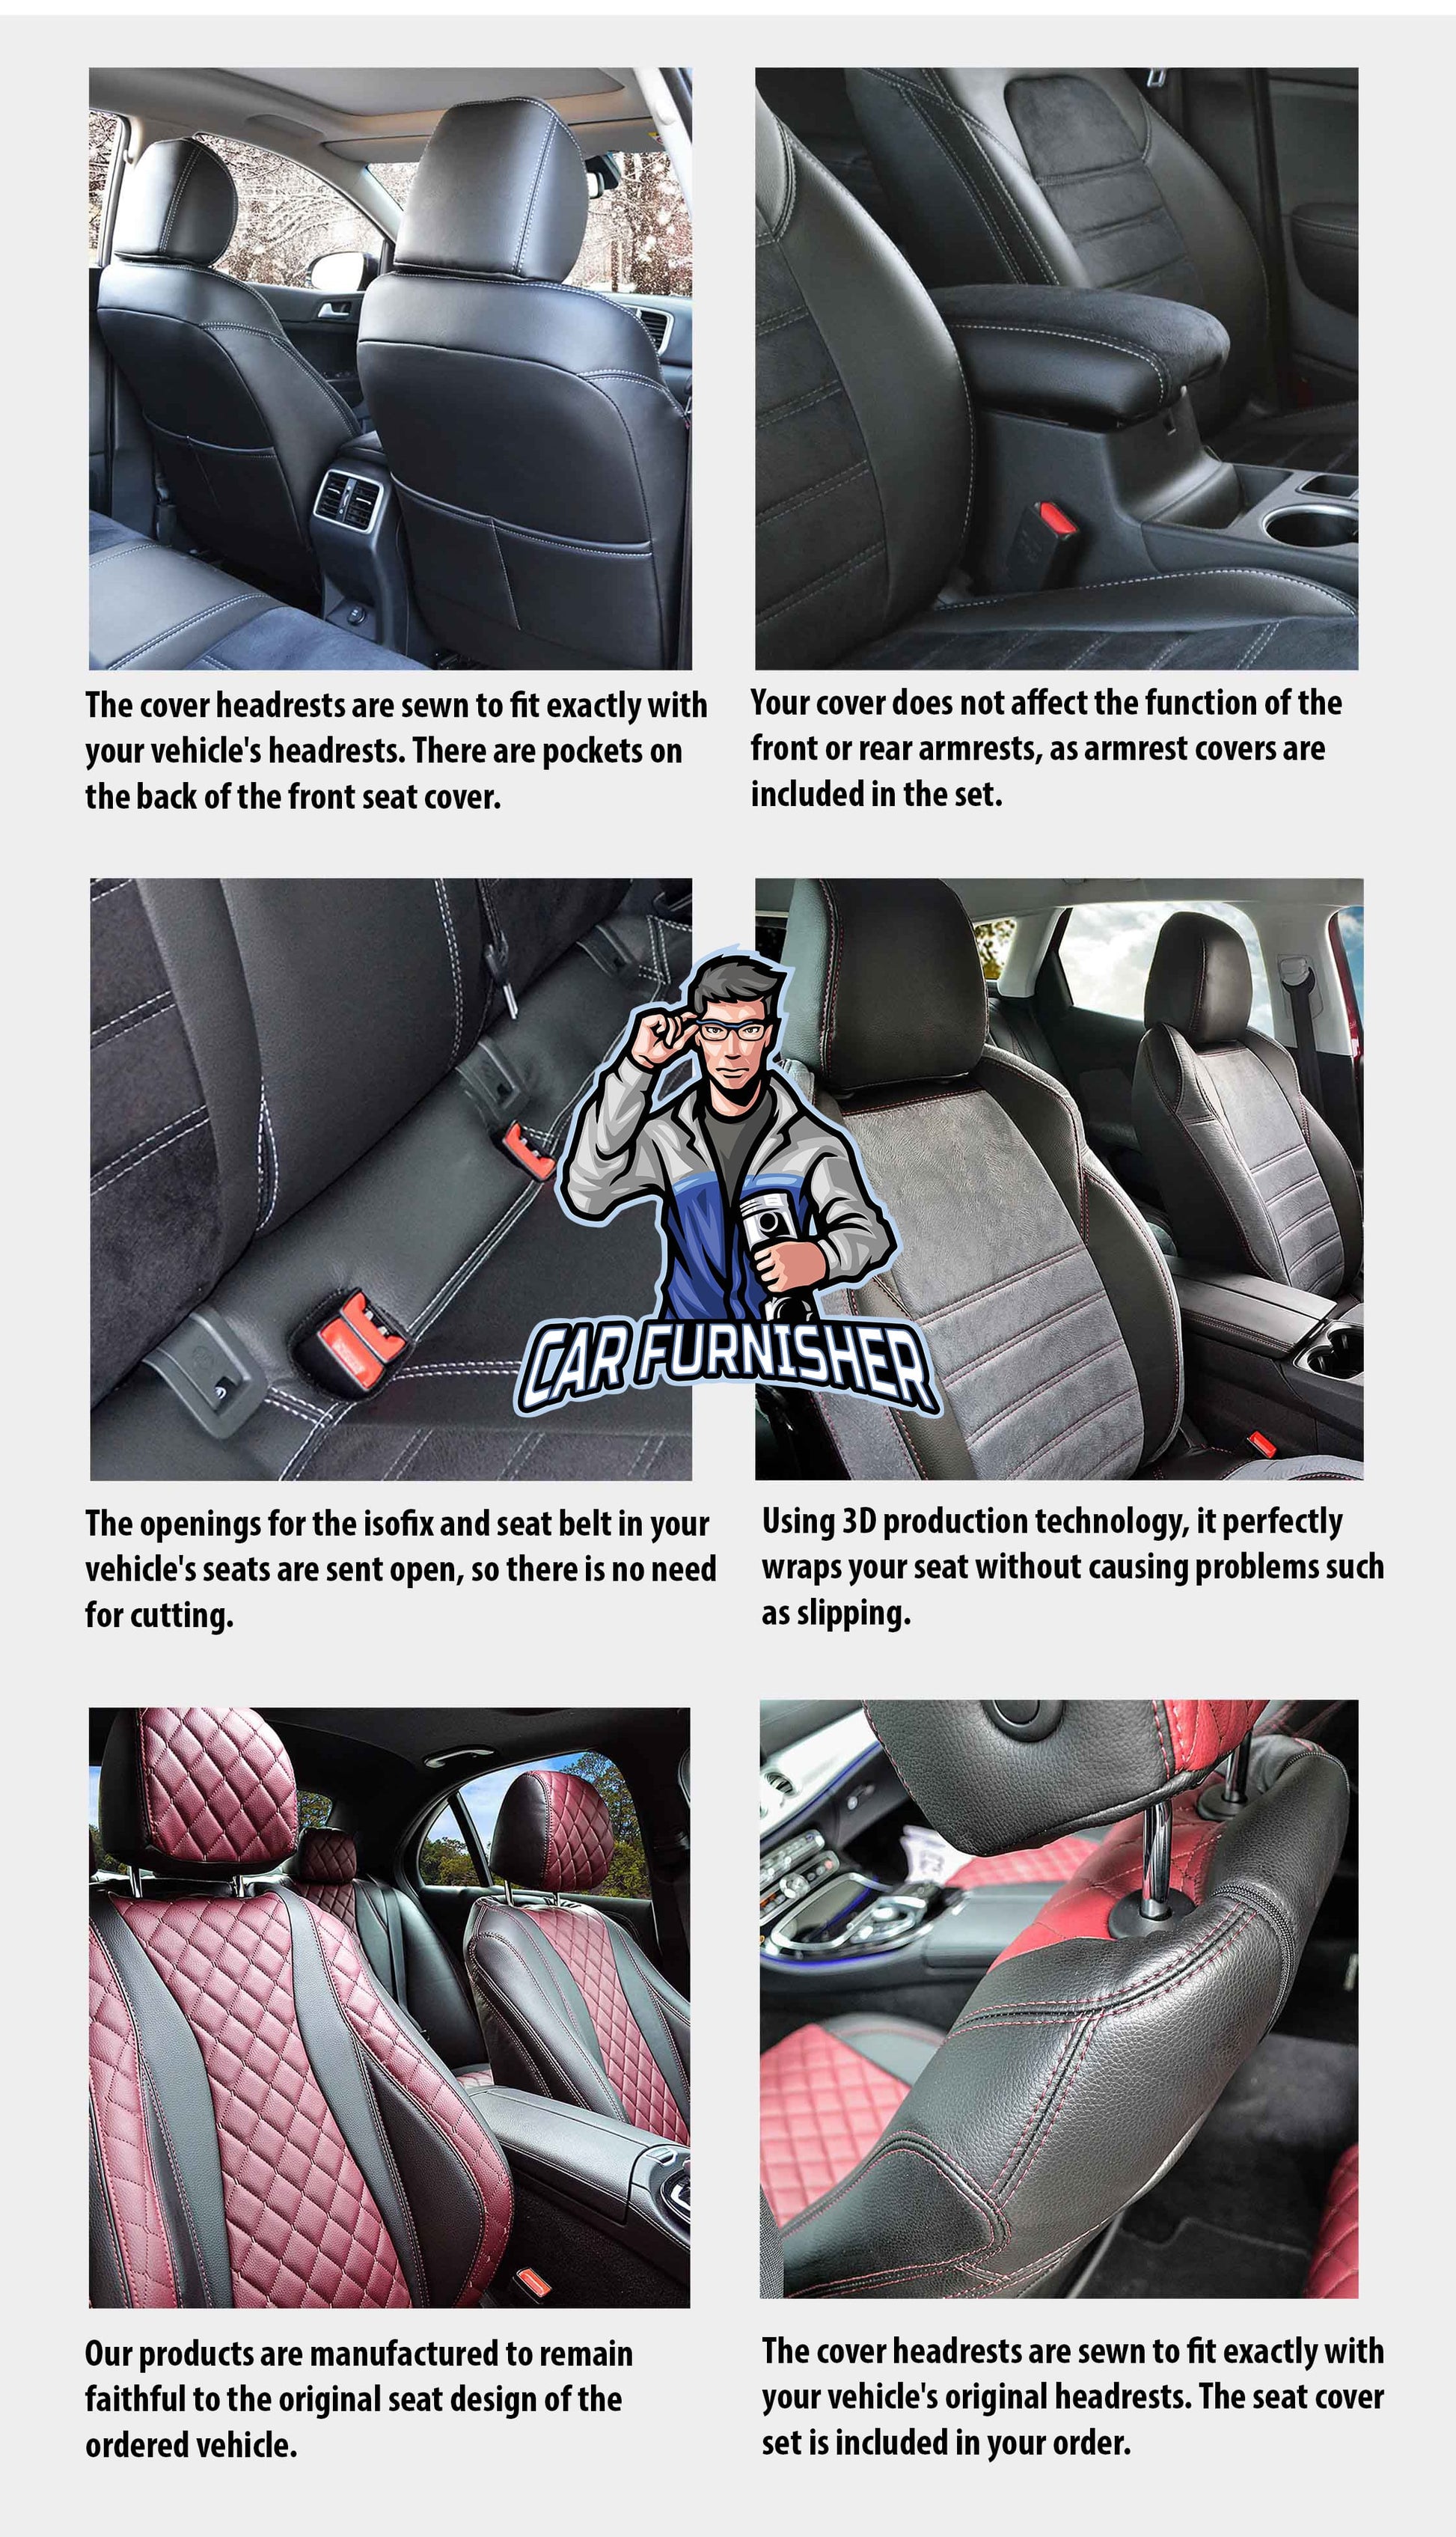 Dacia Sandero Seat Covers Tokyo Foal Feather Design Beige Leather & Foal Feather